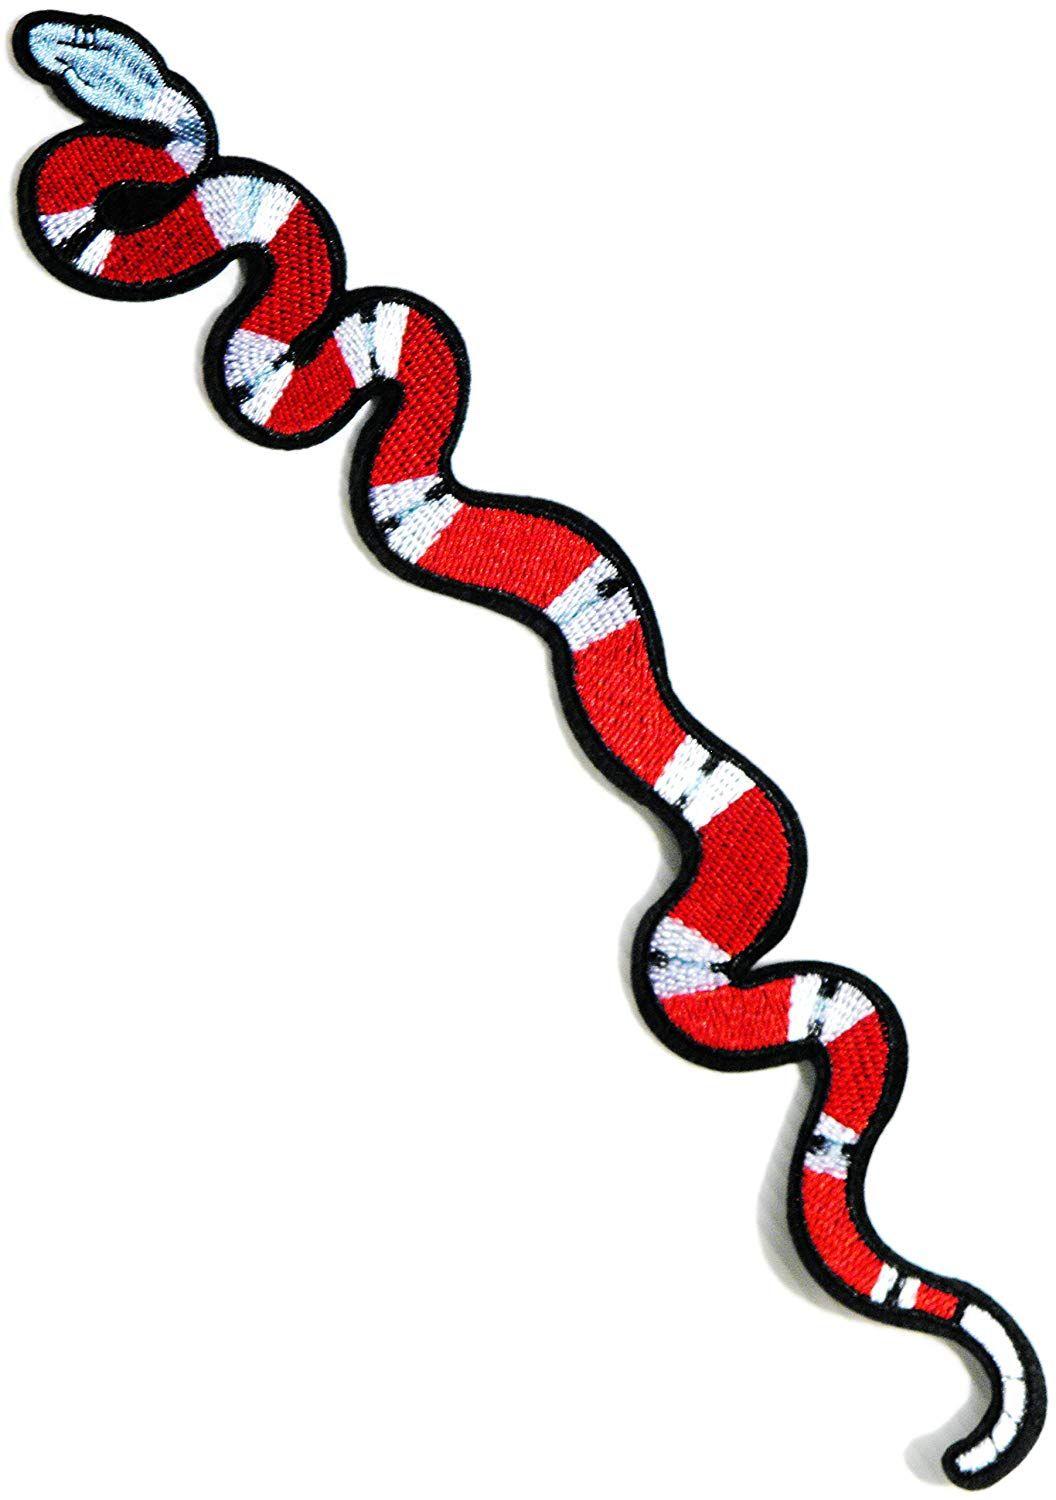 Red Snake Logo - Amazon.com: 12.5